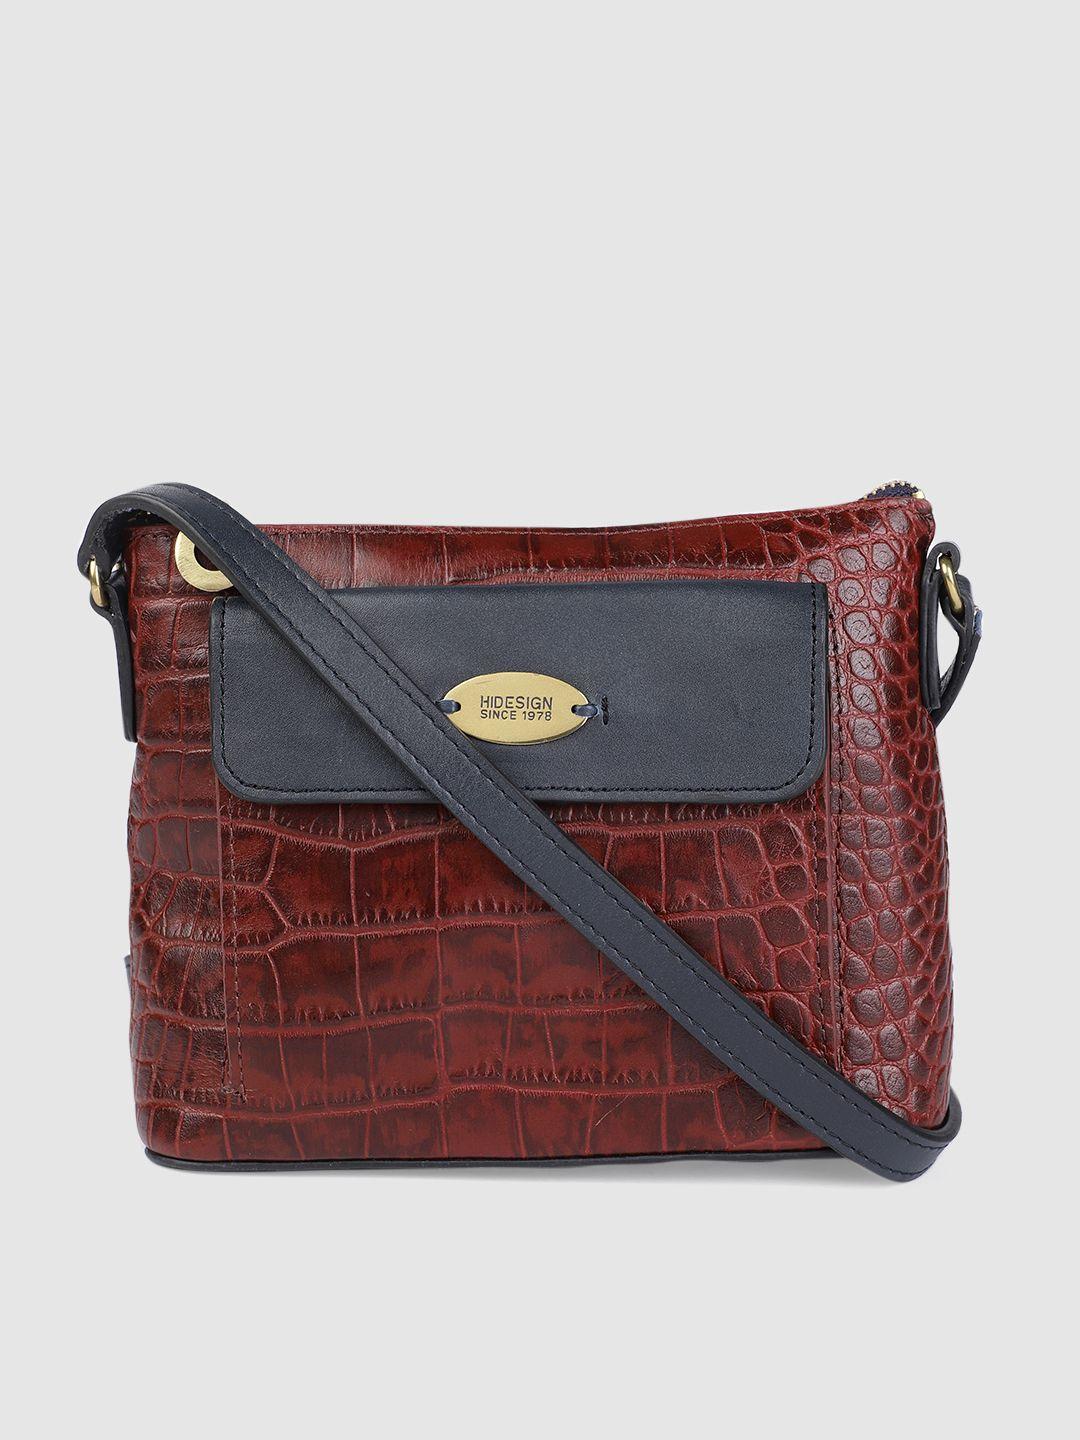 hidesign maroon textured leather sling bag